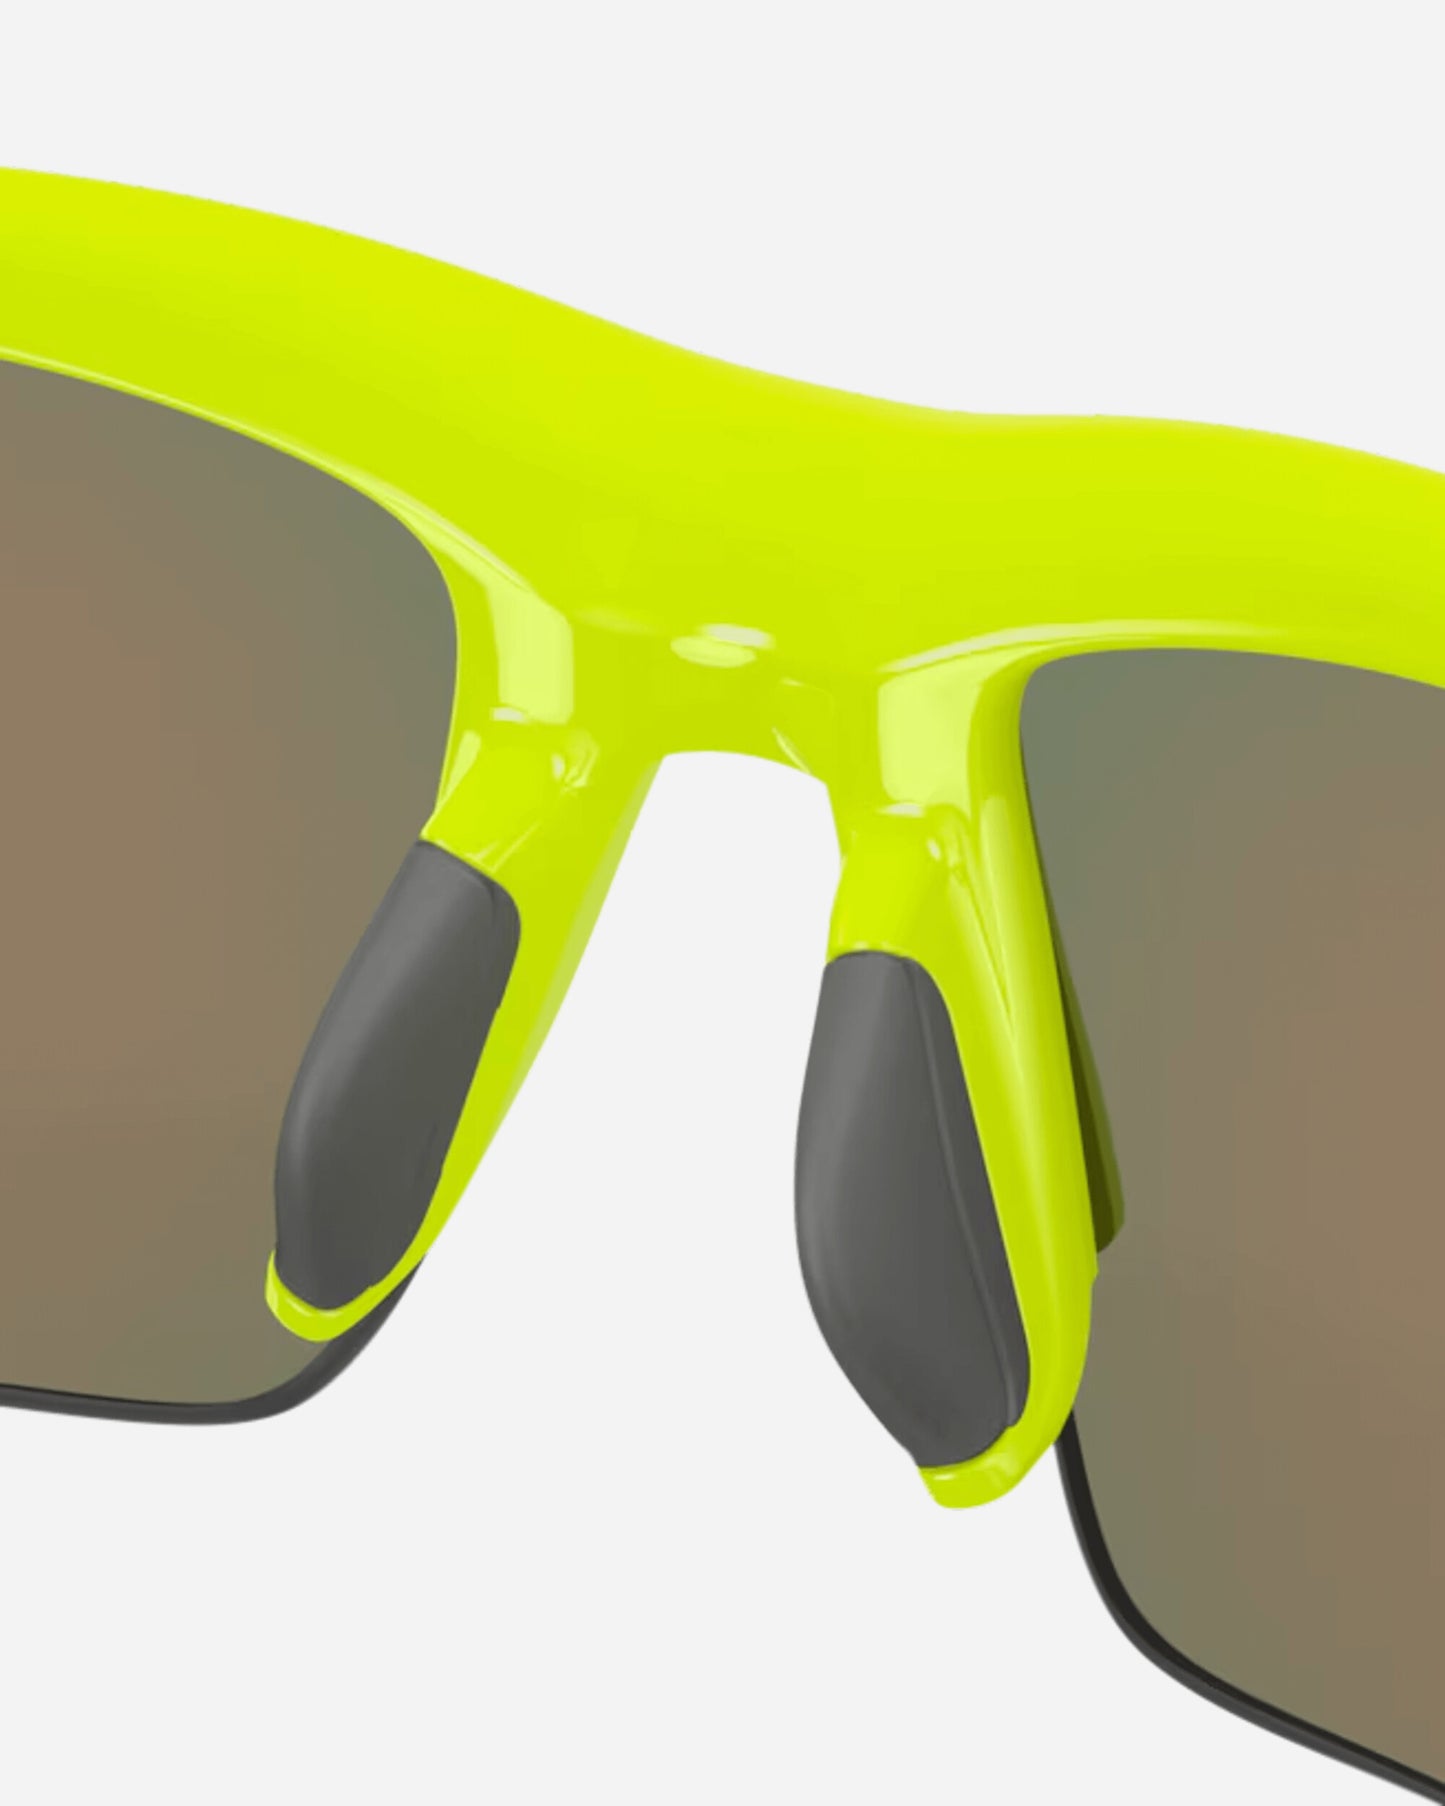 Oakley Capacitor Polished Re Eyewear Sunglasses OJ9013 04